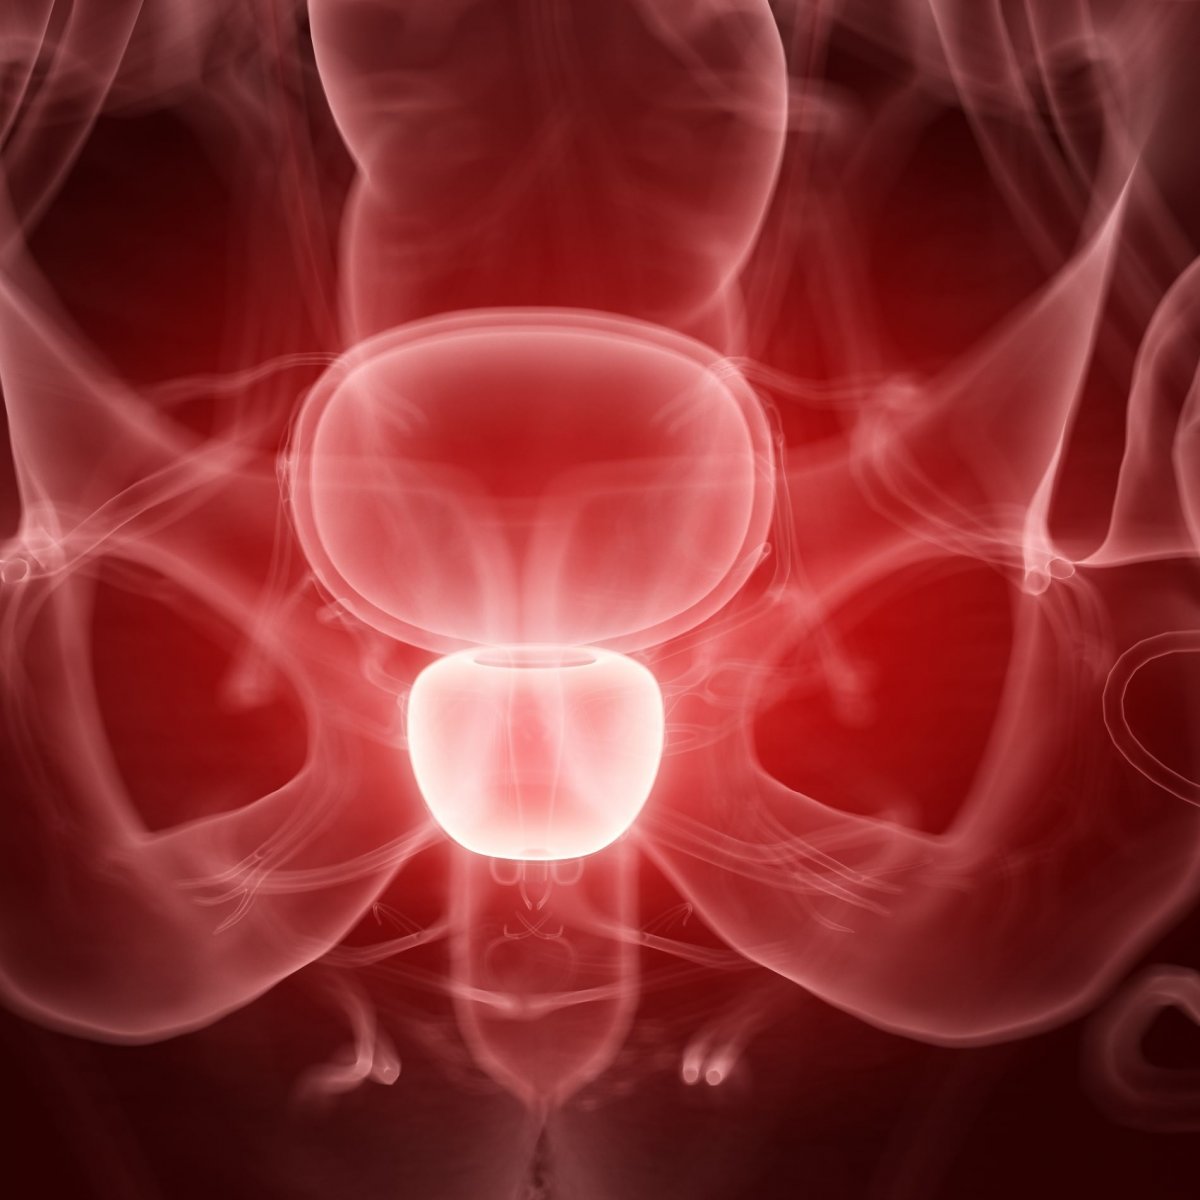 Examen ecografic al prostatei transrectal